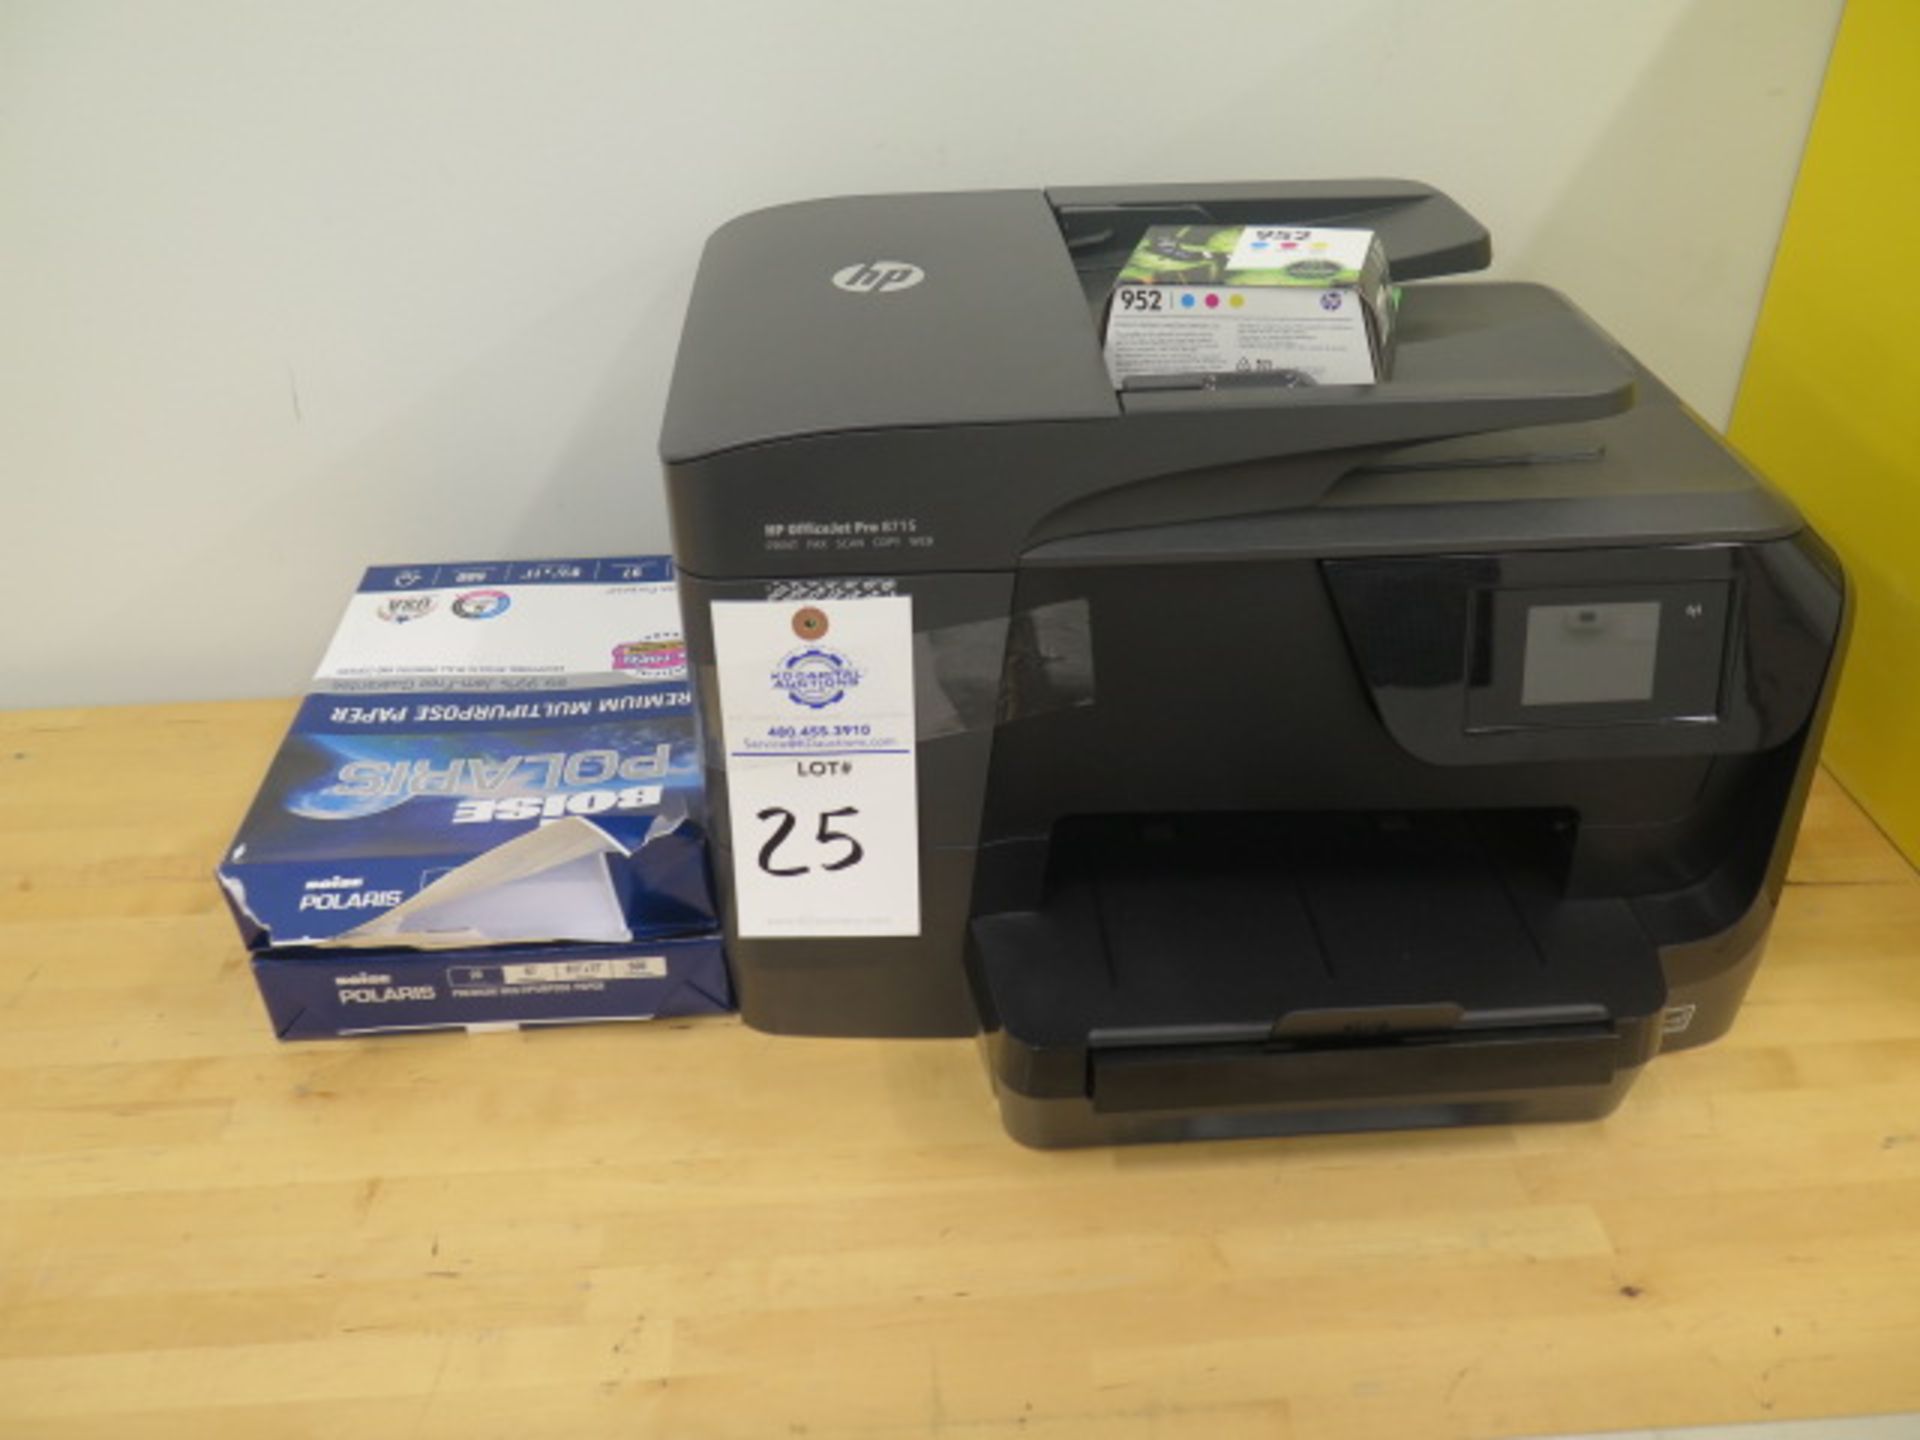 Hewlett Packard OfficeJet Pro 8715 Copier/Printer